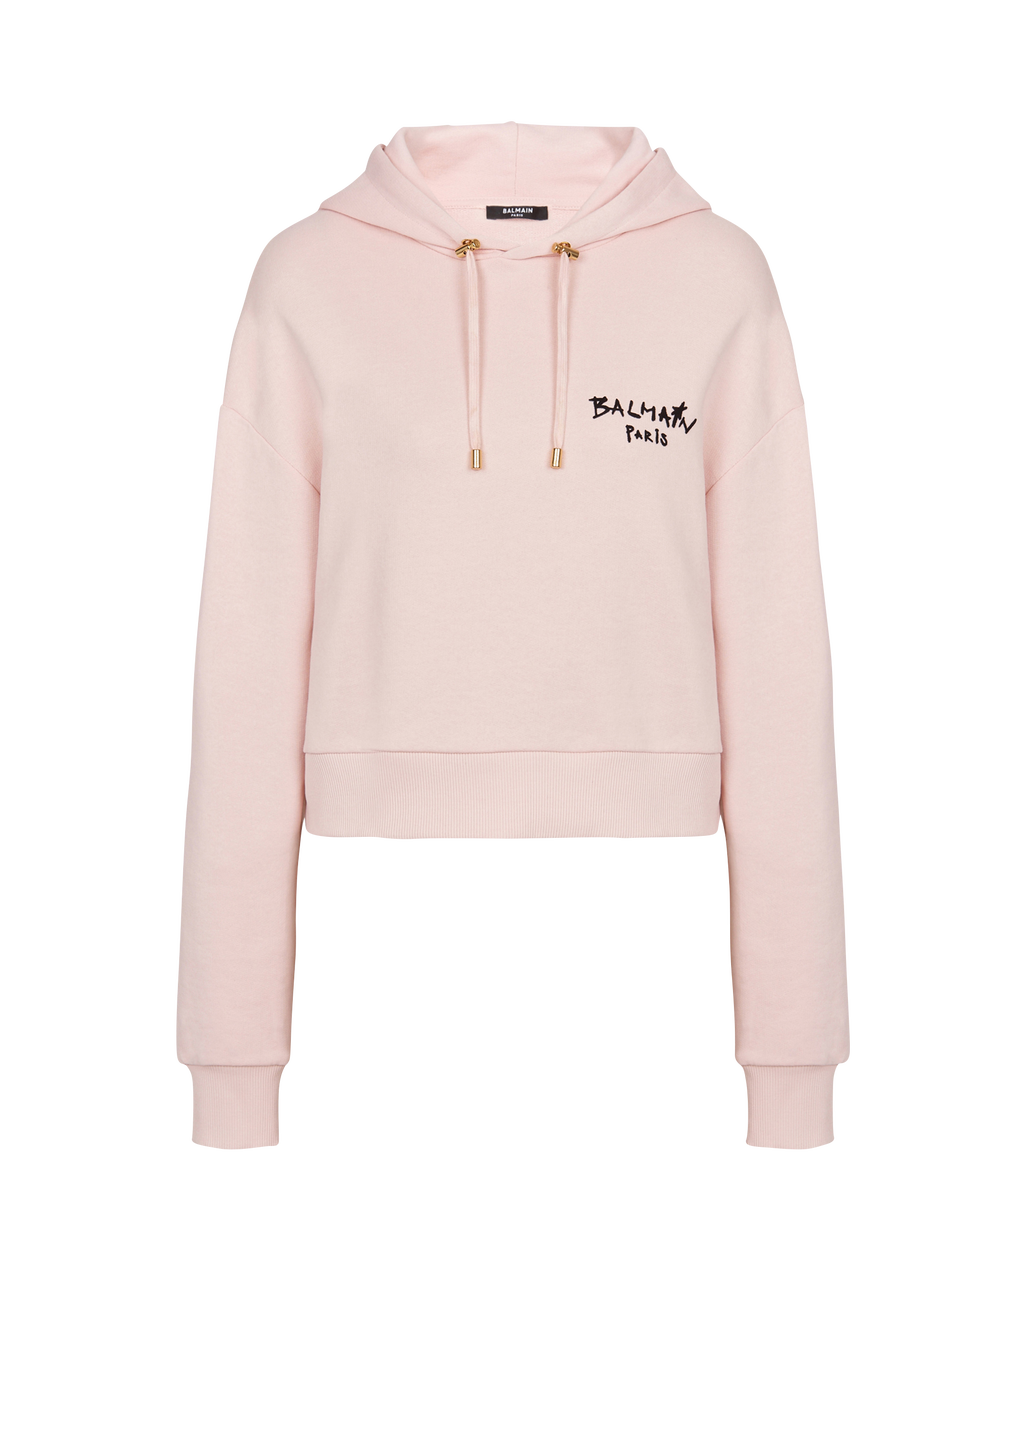 Cropped eco-design cotton sweatshirt with flocked graffiti Balmain logo, pink, hi-res